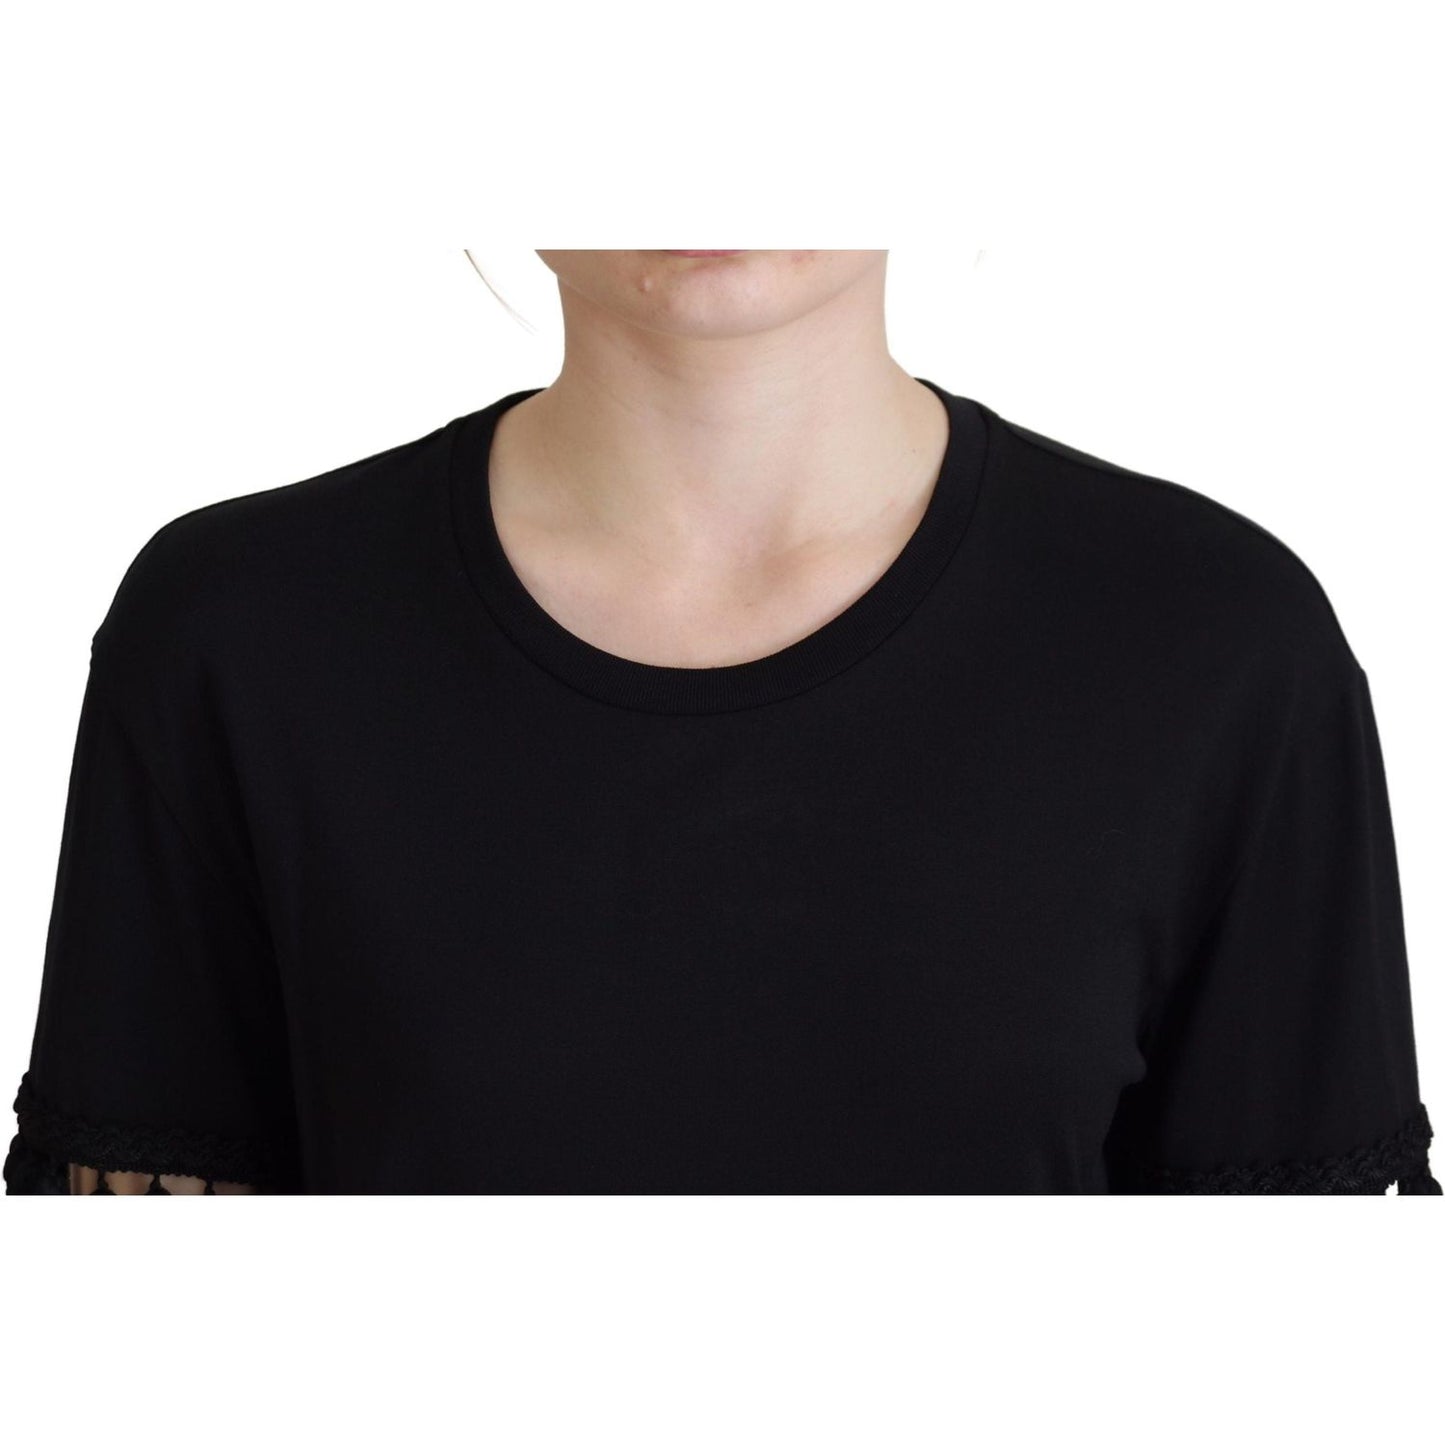 Dolce & GabbanaElegant Black Cotton Short Sleeve TeeMcRichard Designer Brands£599.00